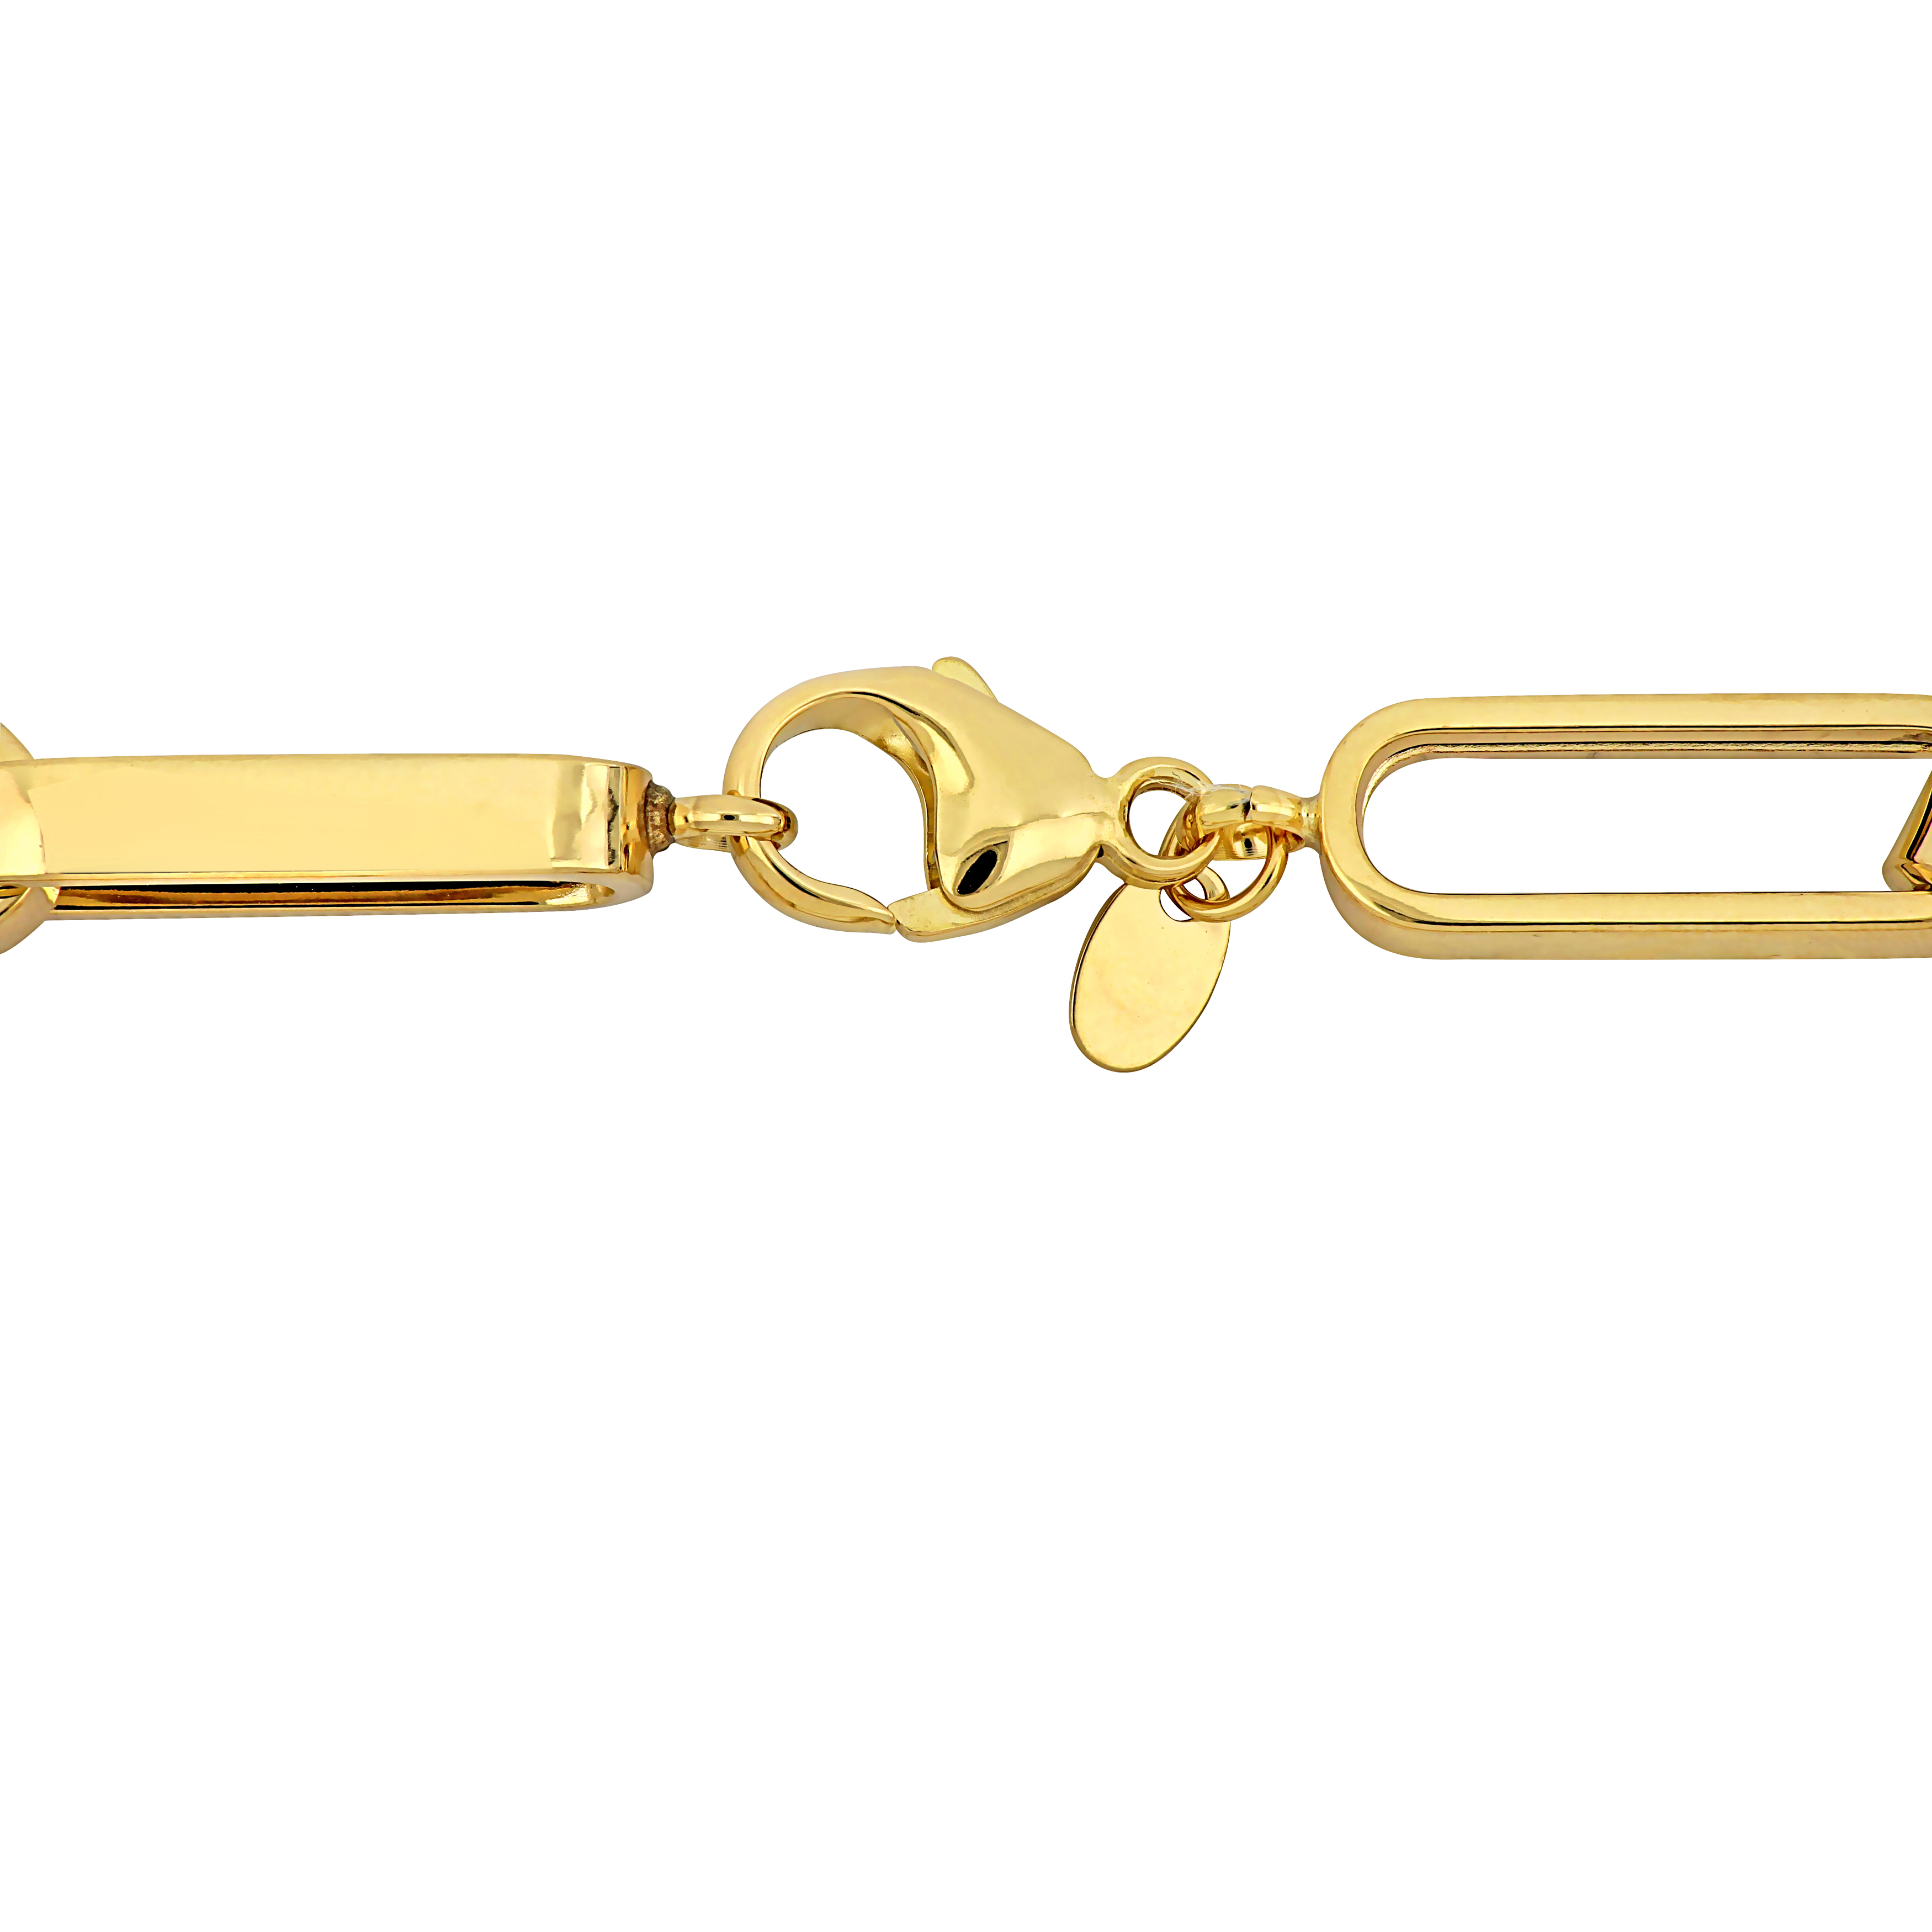 Alternate Link Bracelet in 14k Yellow Gold - 8 in.